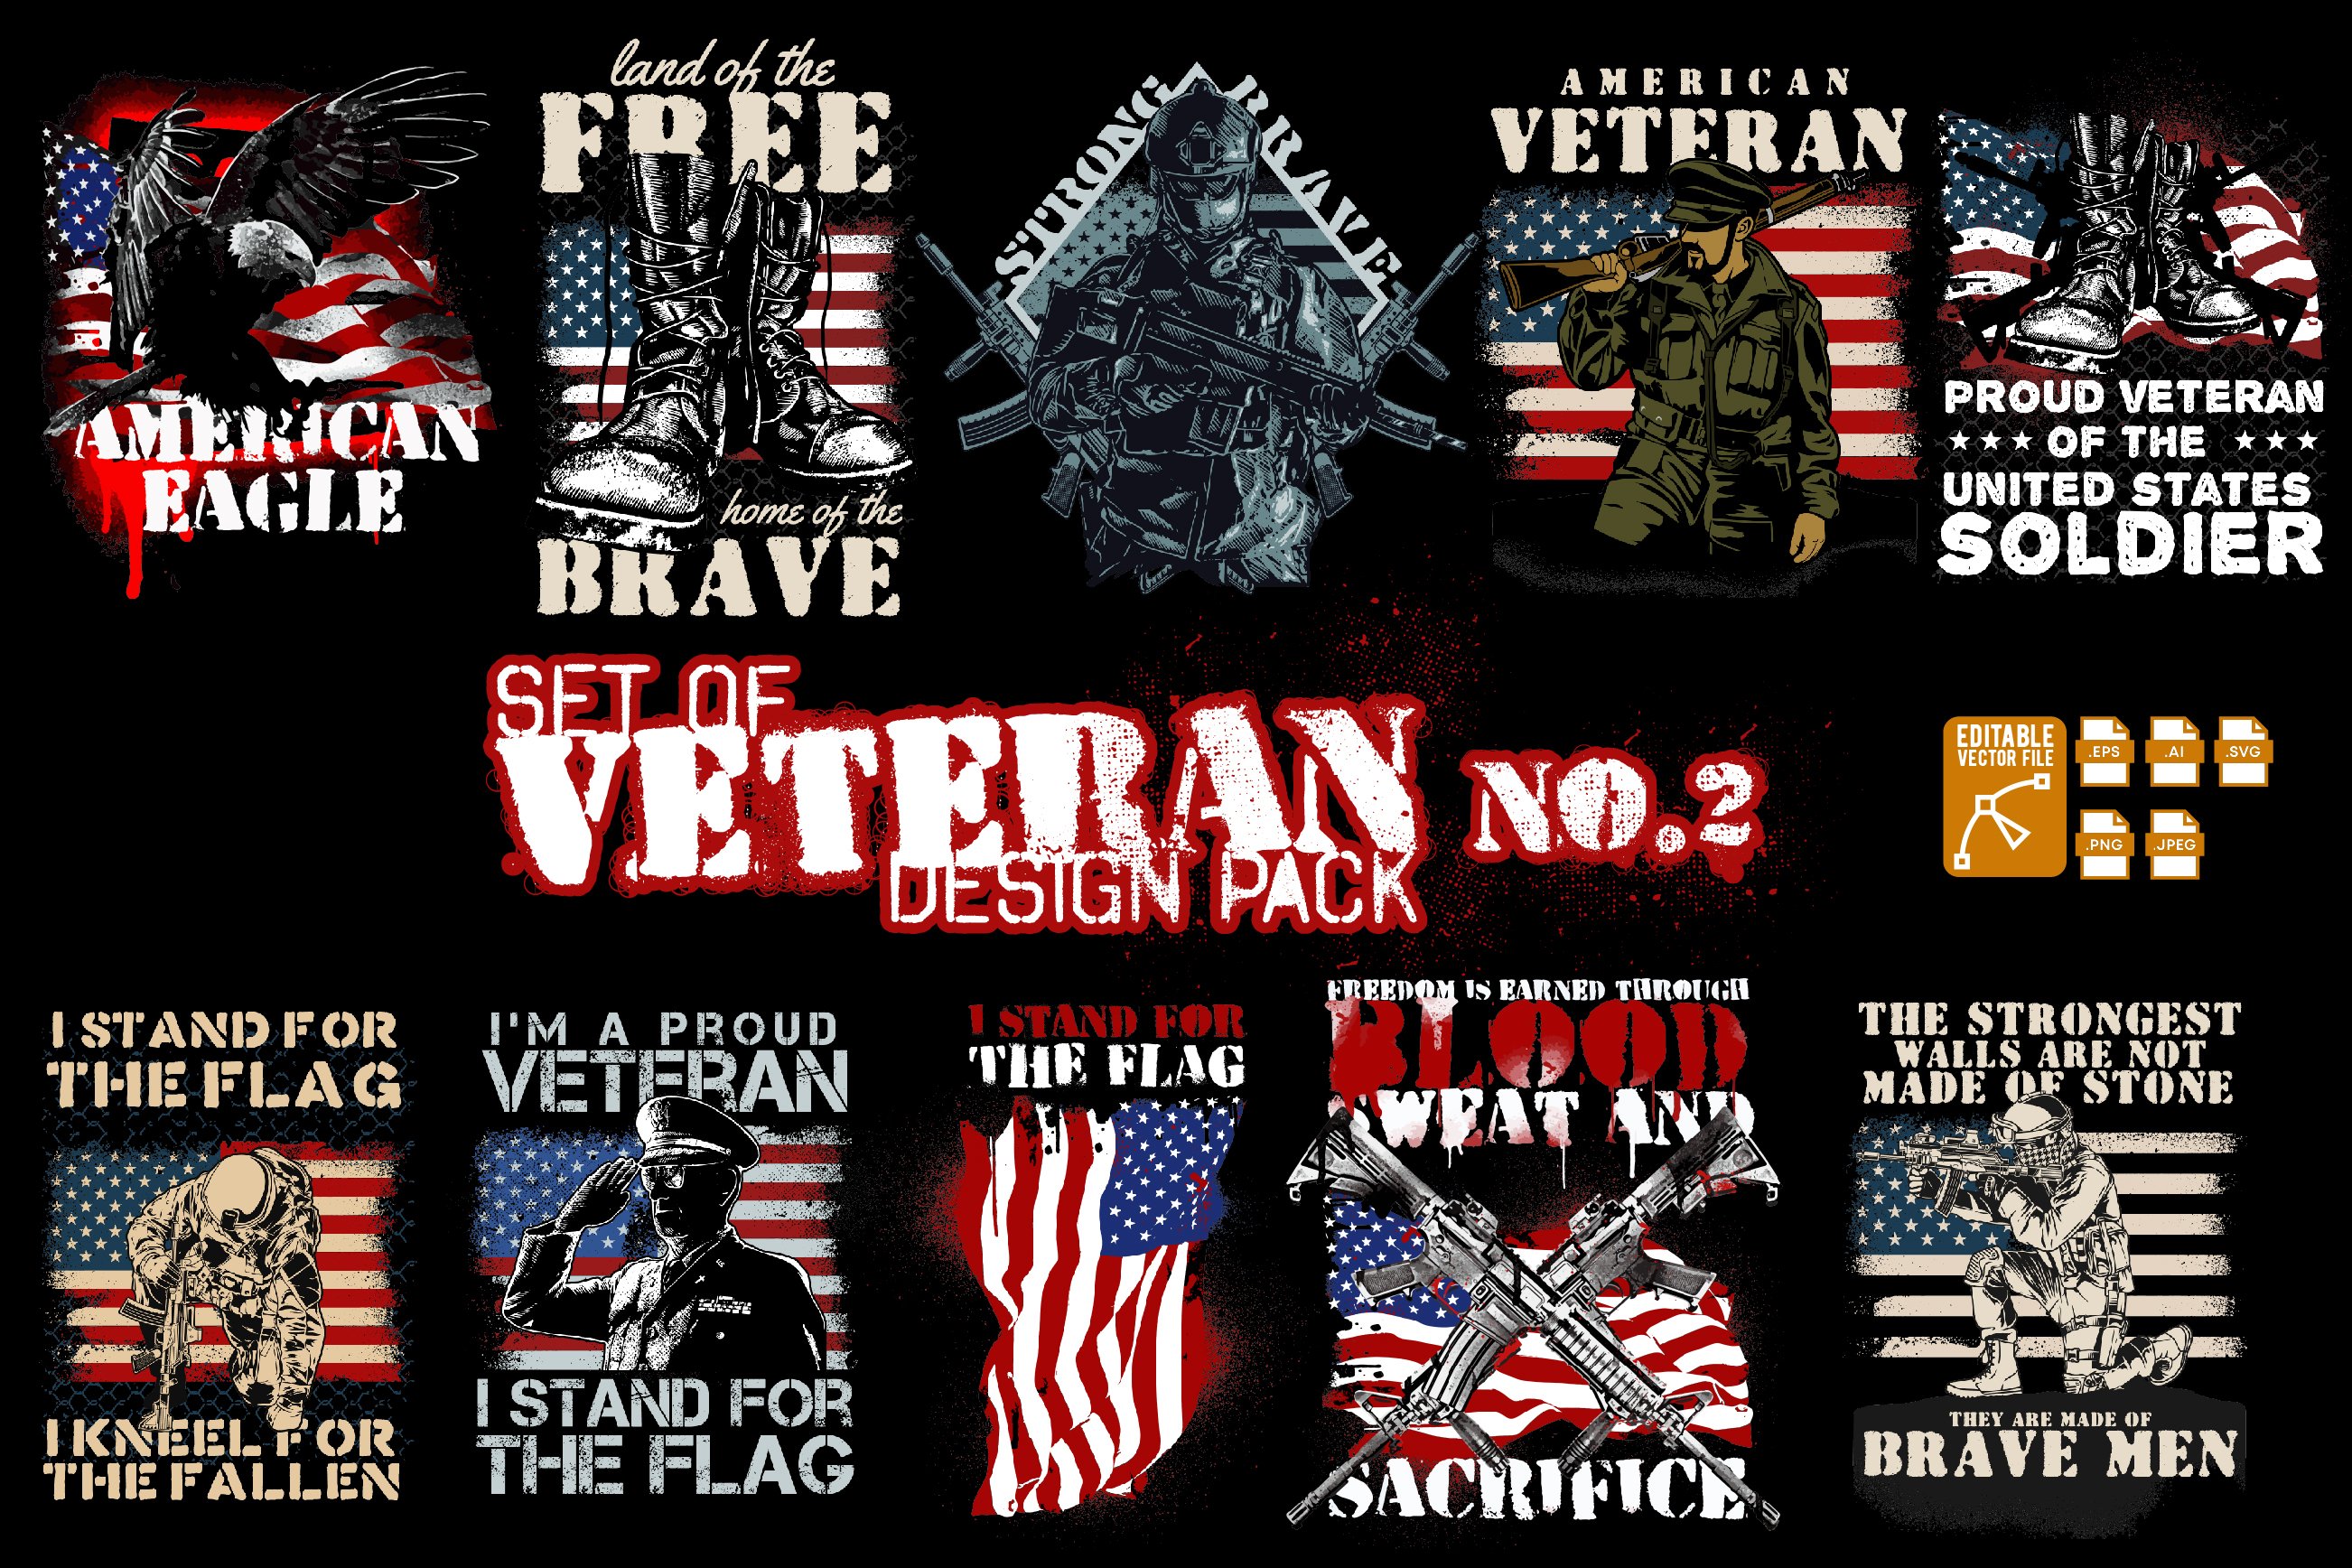 Set of Veteran design pack no 2 cover image.